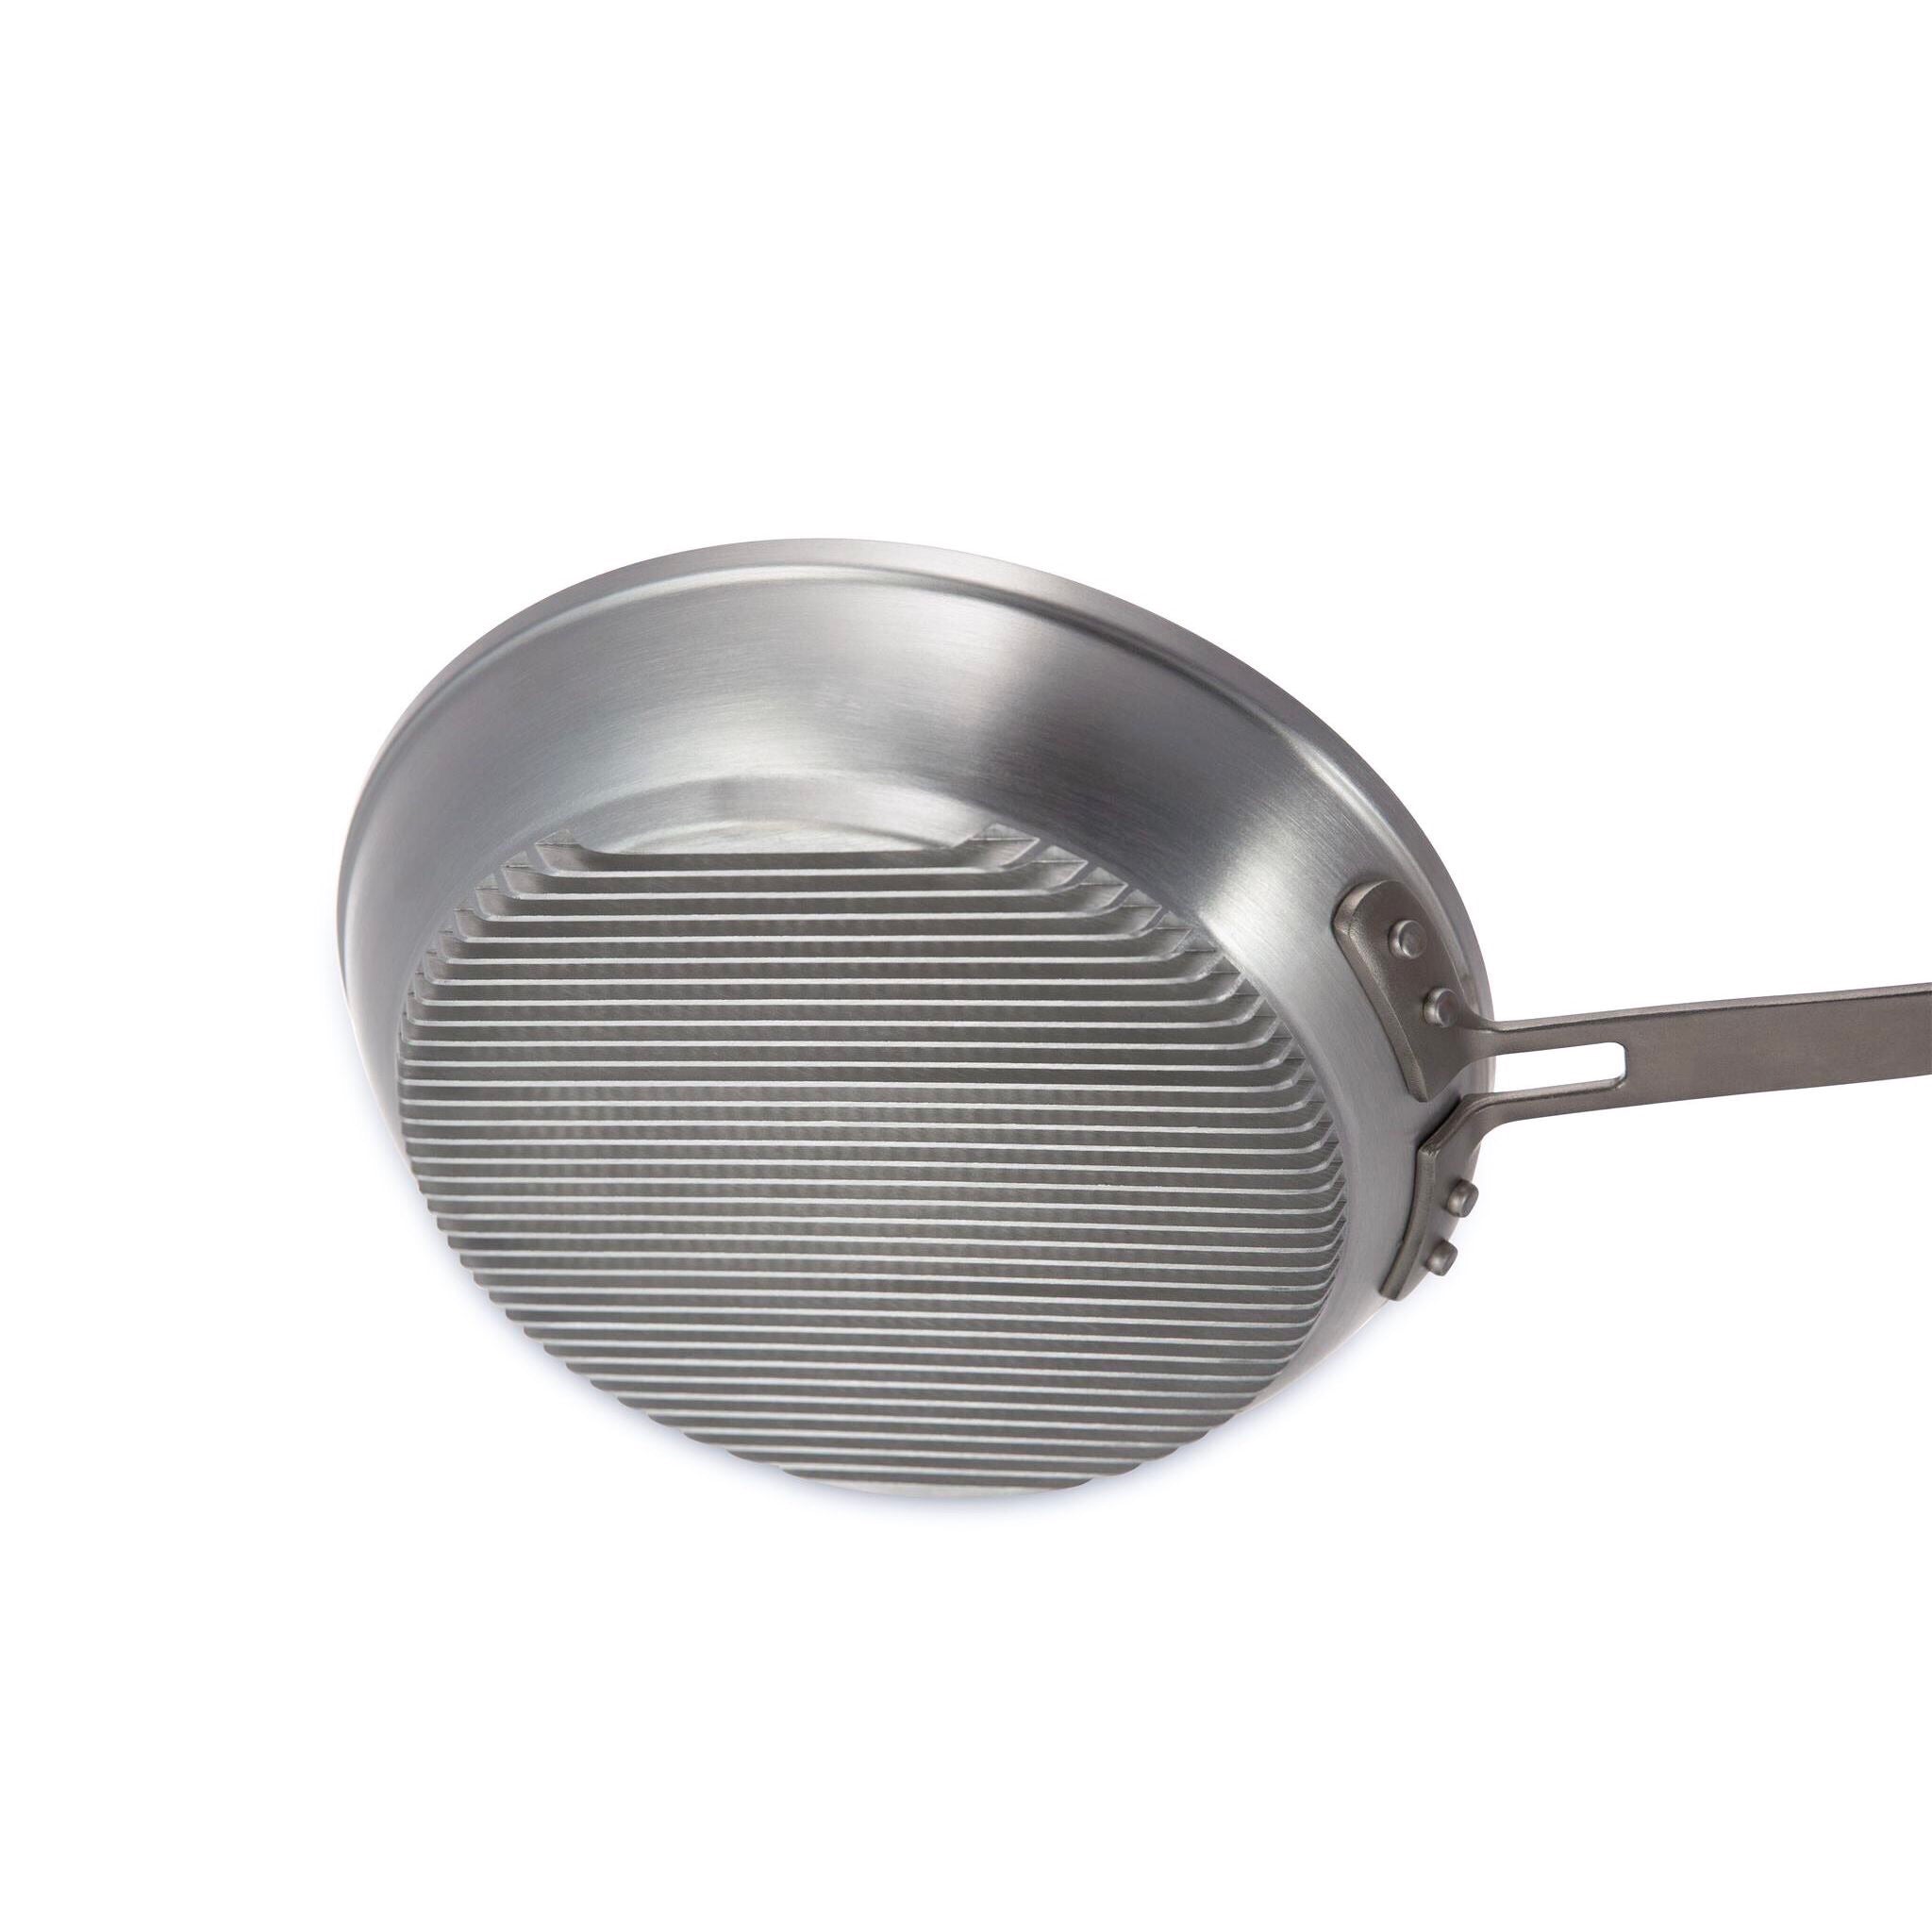 FLAMEPRO™ RAPID HEAT PROFESSIONAL ALUMINUM NONSTICK FRY PAN, TIME-AND- –  Turbo Pot